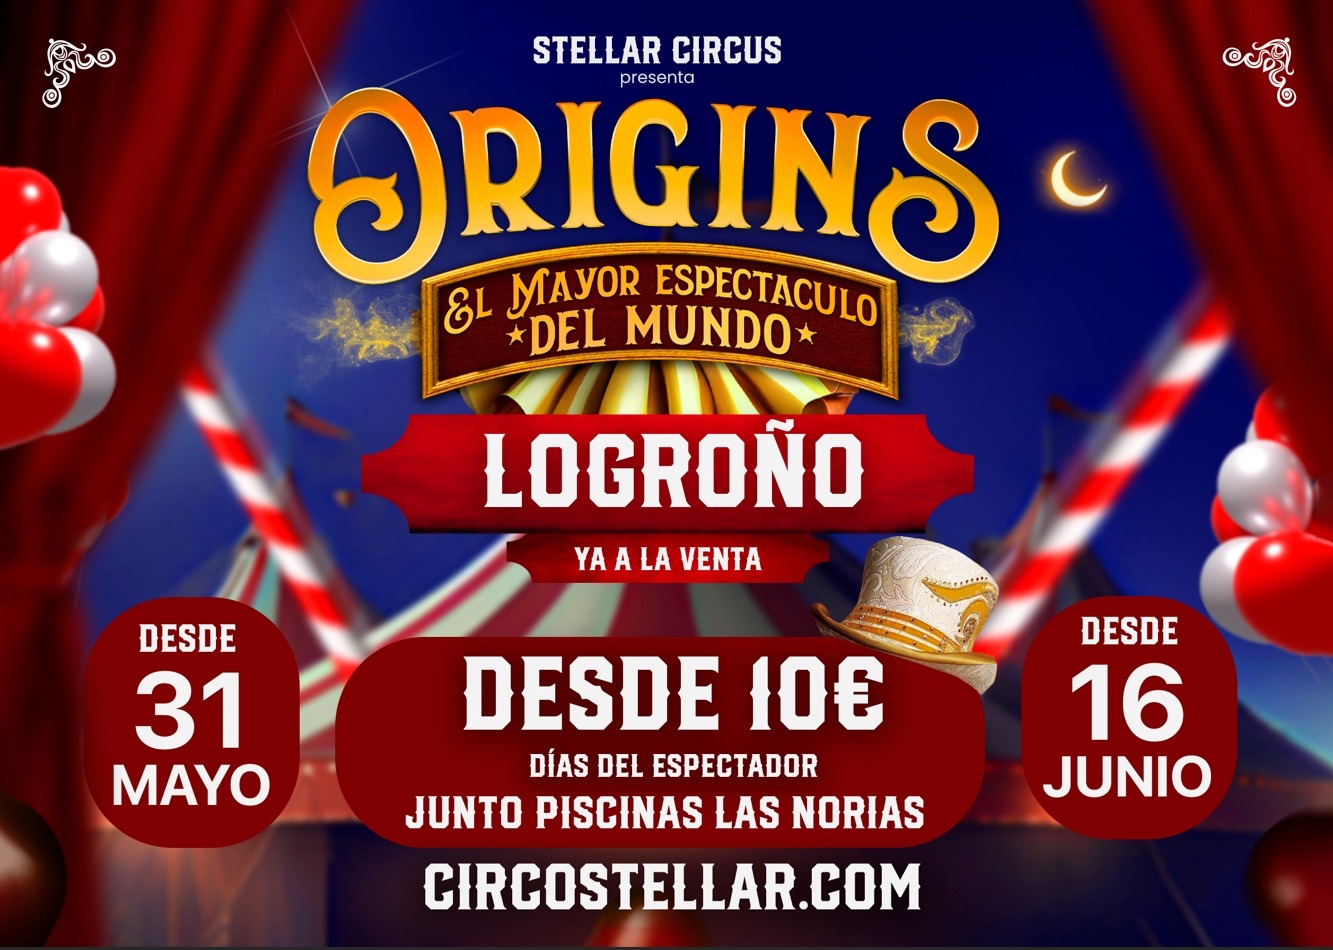 Circo Stellar: Origins